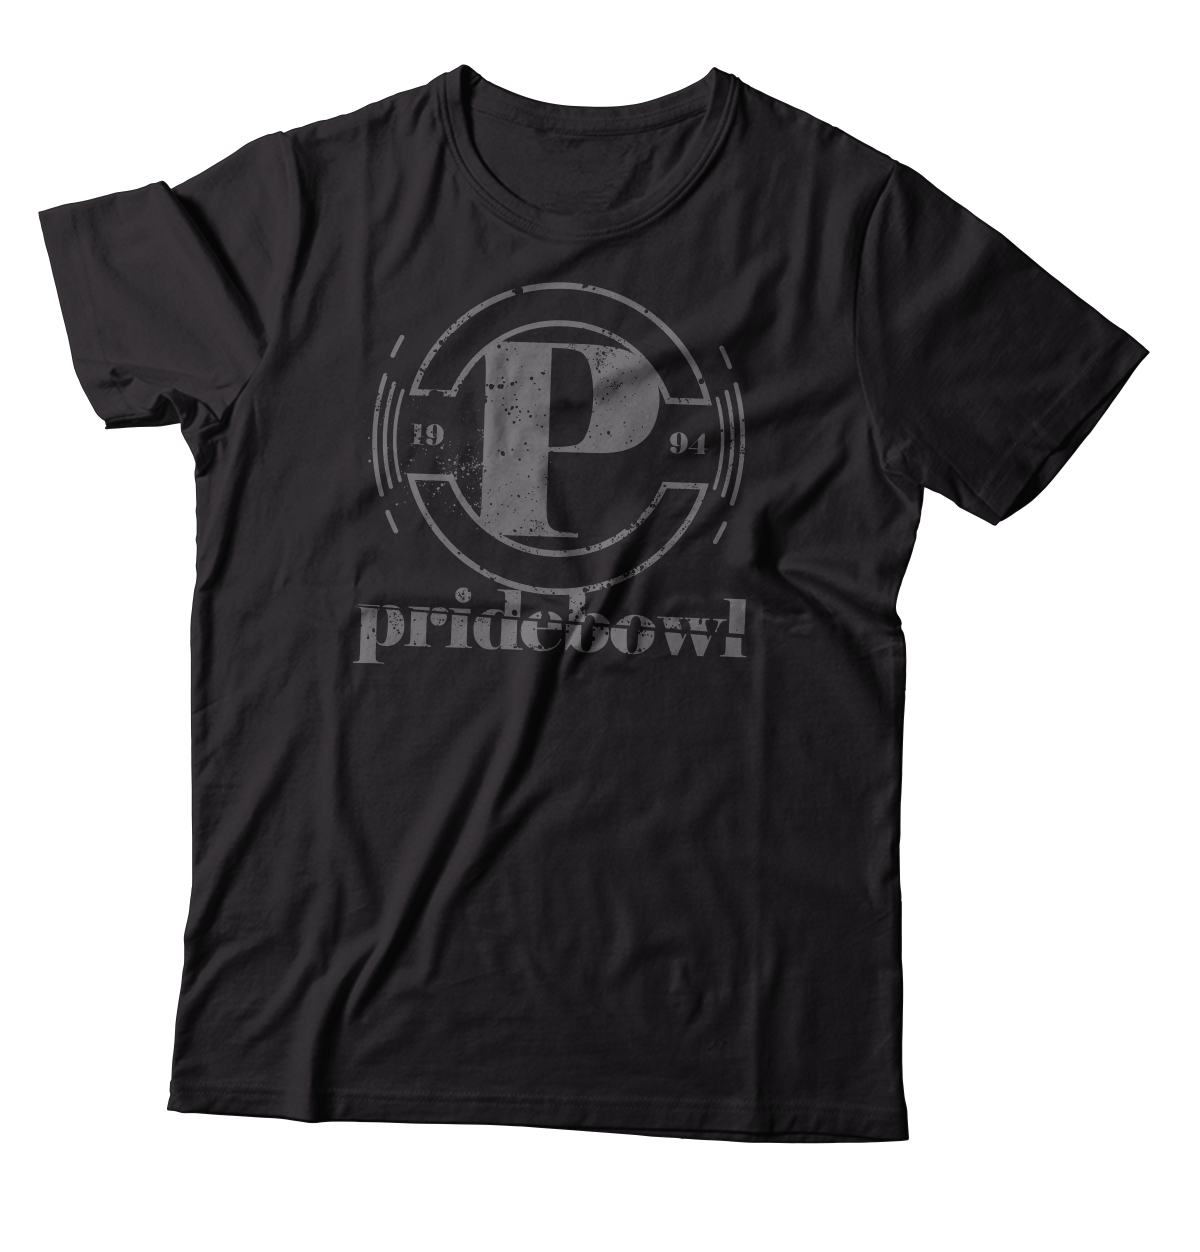 PRIDEBOWL - "P Logo" (Black) (T-Shirt)